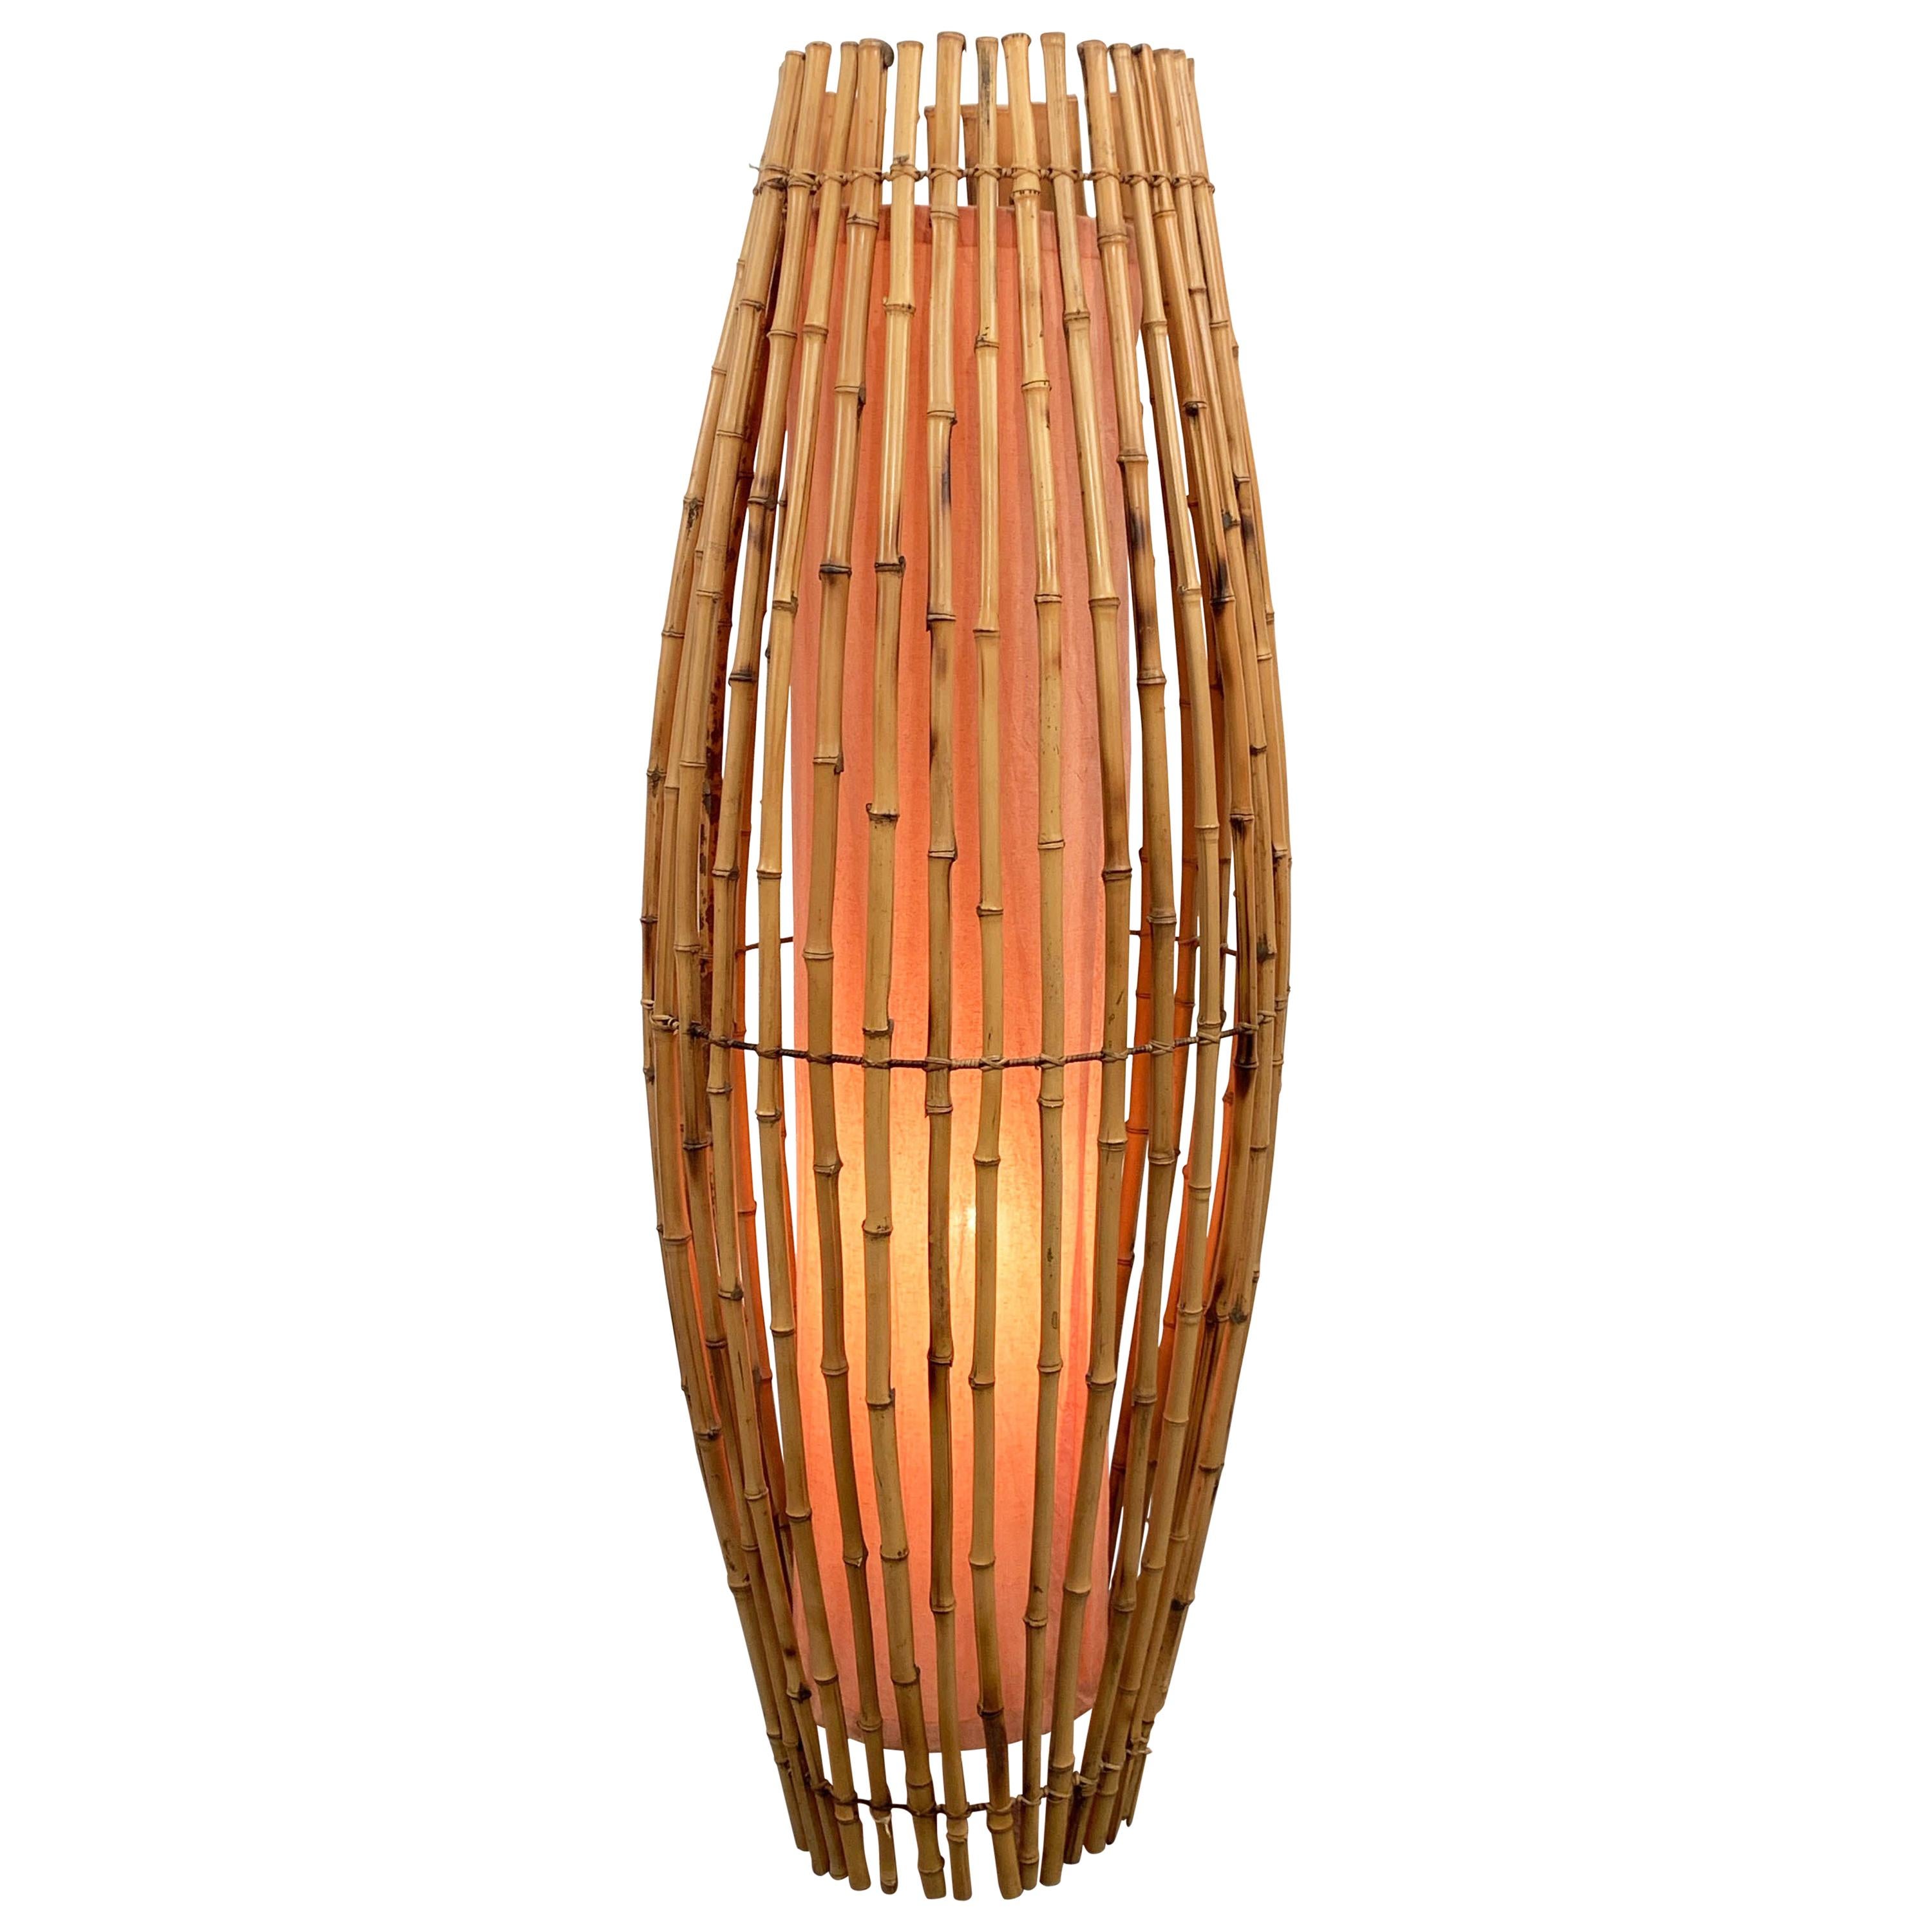 Midcentury Italian Bamboo and Rattan Floor Lamp Attributed to Albini, 1960s